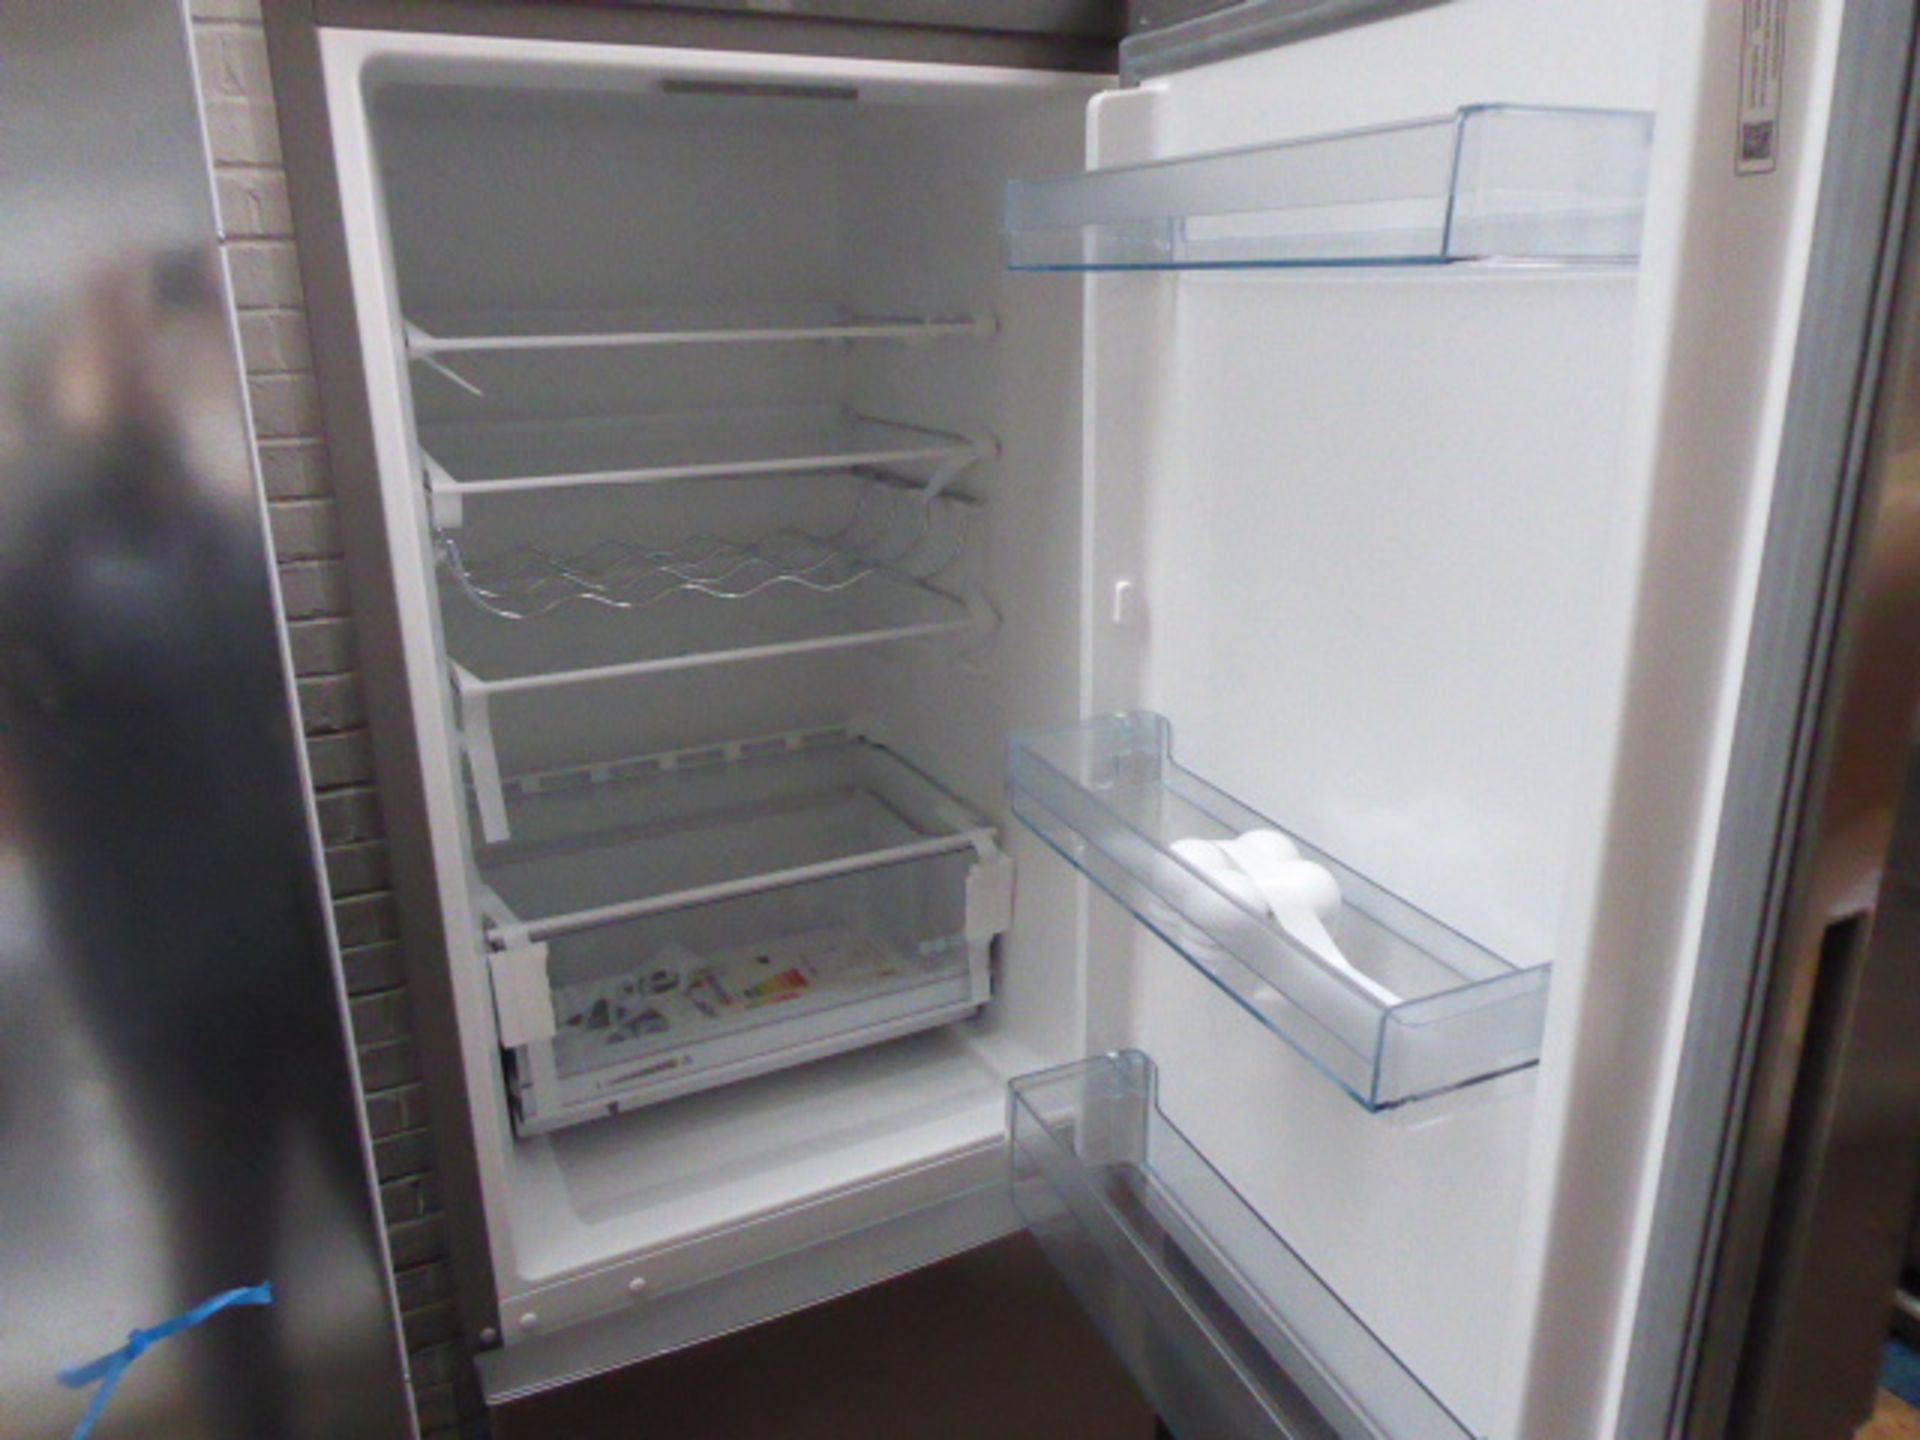 KG33VVIEAGB Siemens Free-standing fridge-freezer - Image 2 of 2